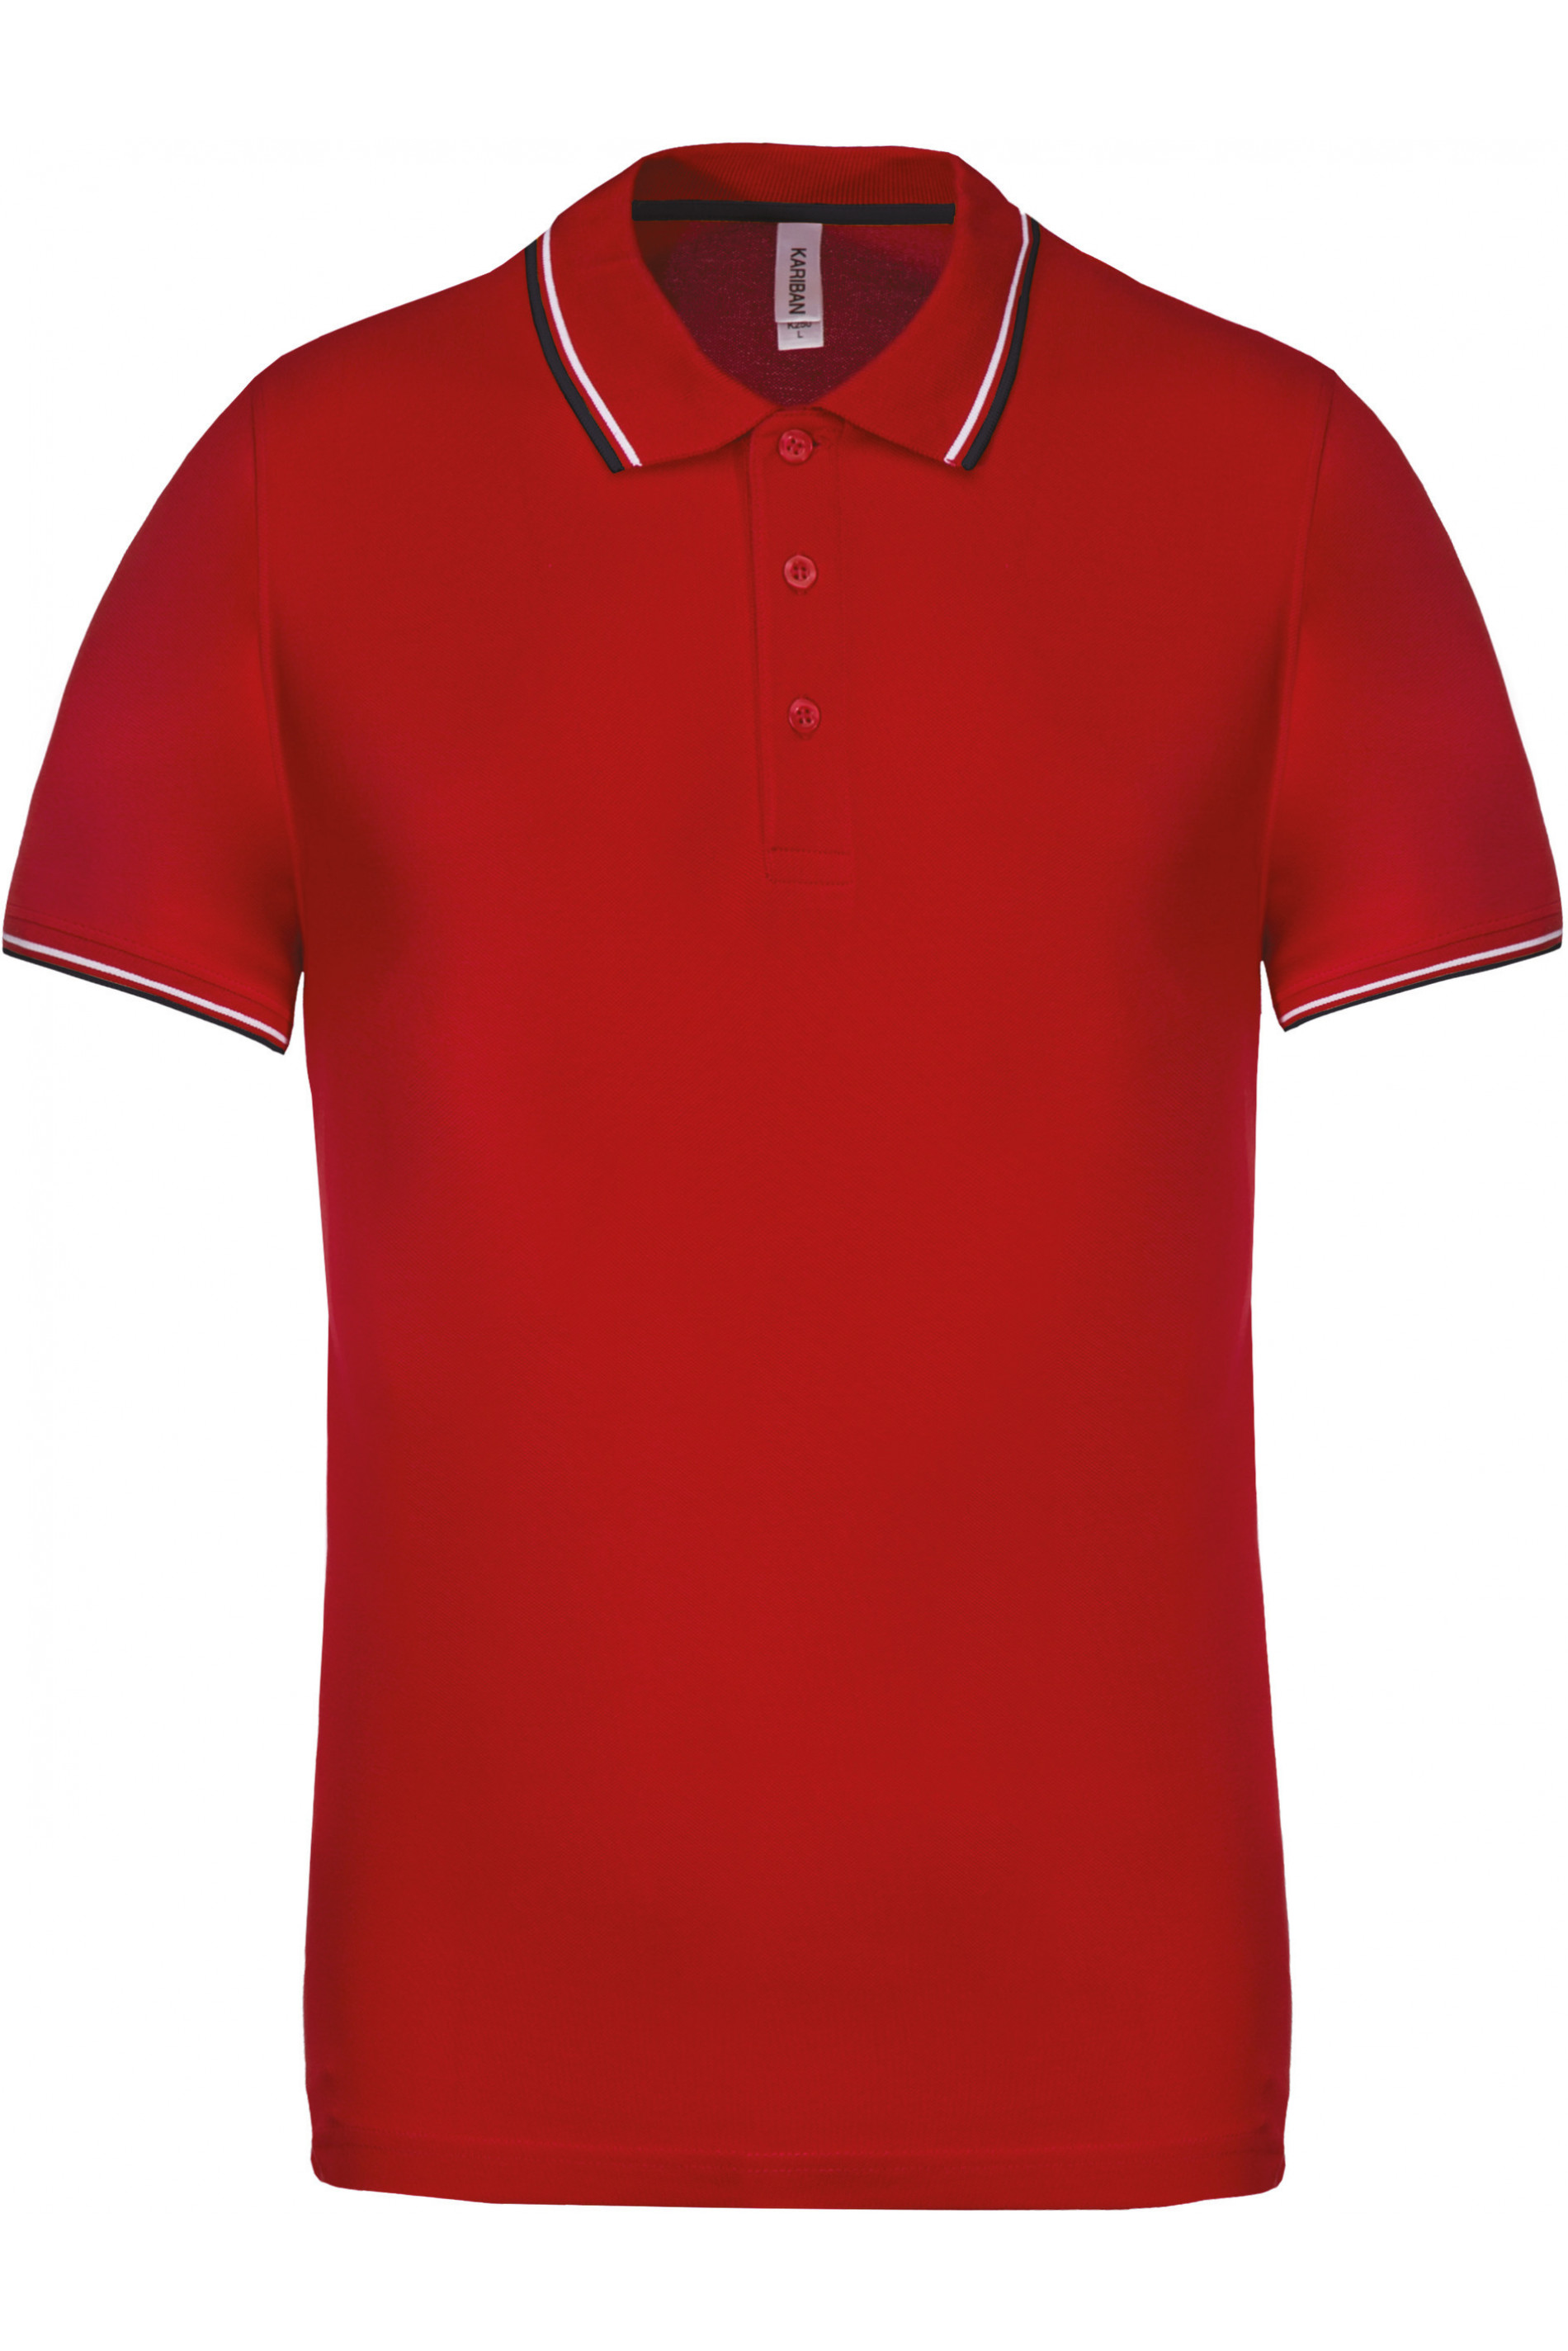 Short-sleeved polo shirt K250 contrast